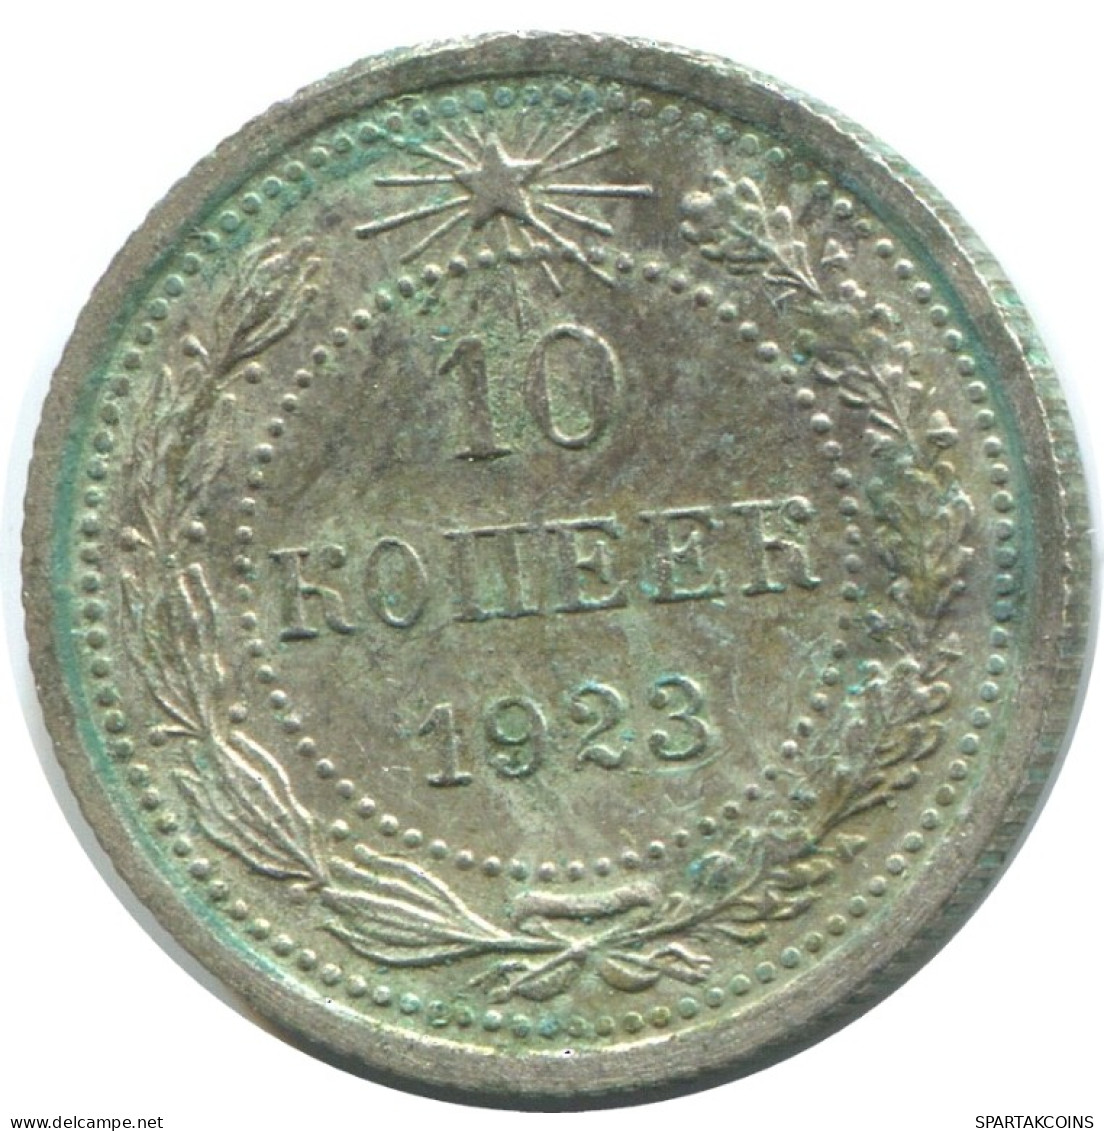 10 KOPEKS 1923 RUSSIA RSFSR SILVER Coin HIGH GRADE #AF012.4.U.A - Rusia